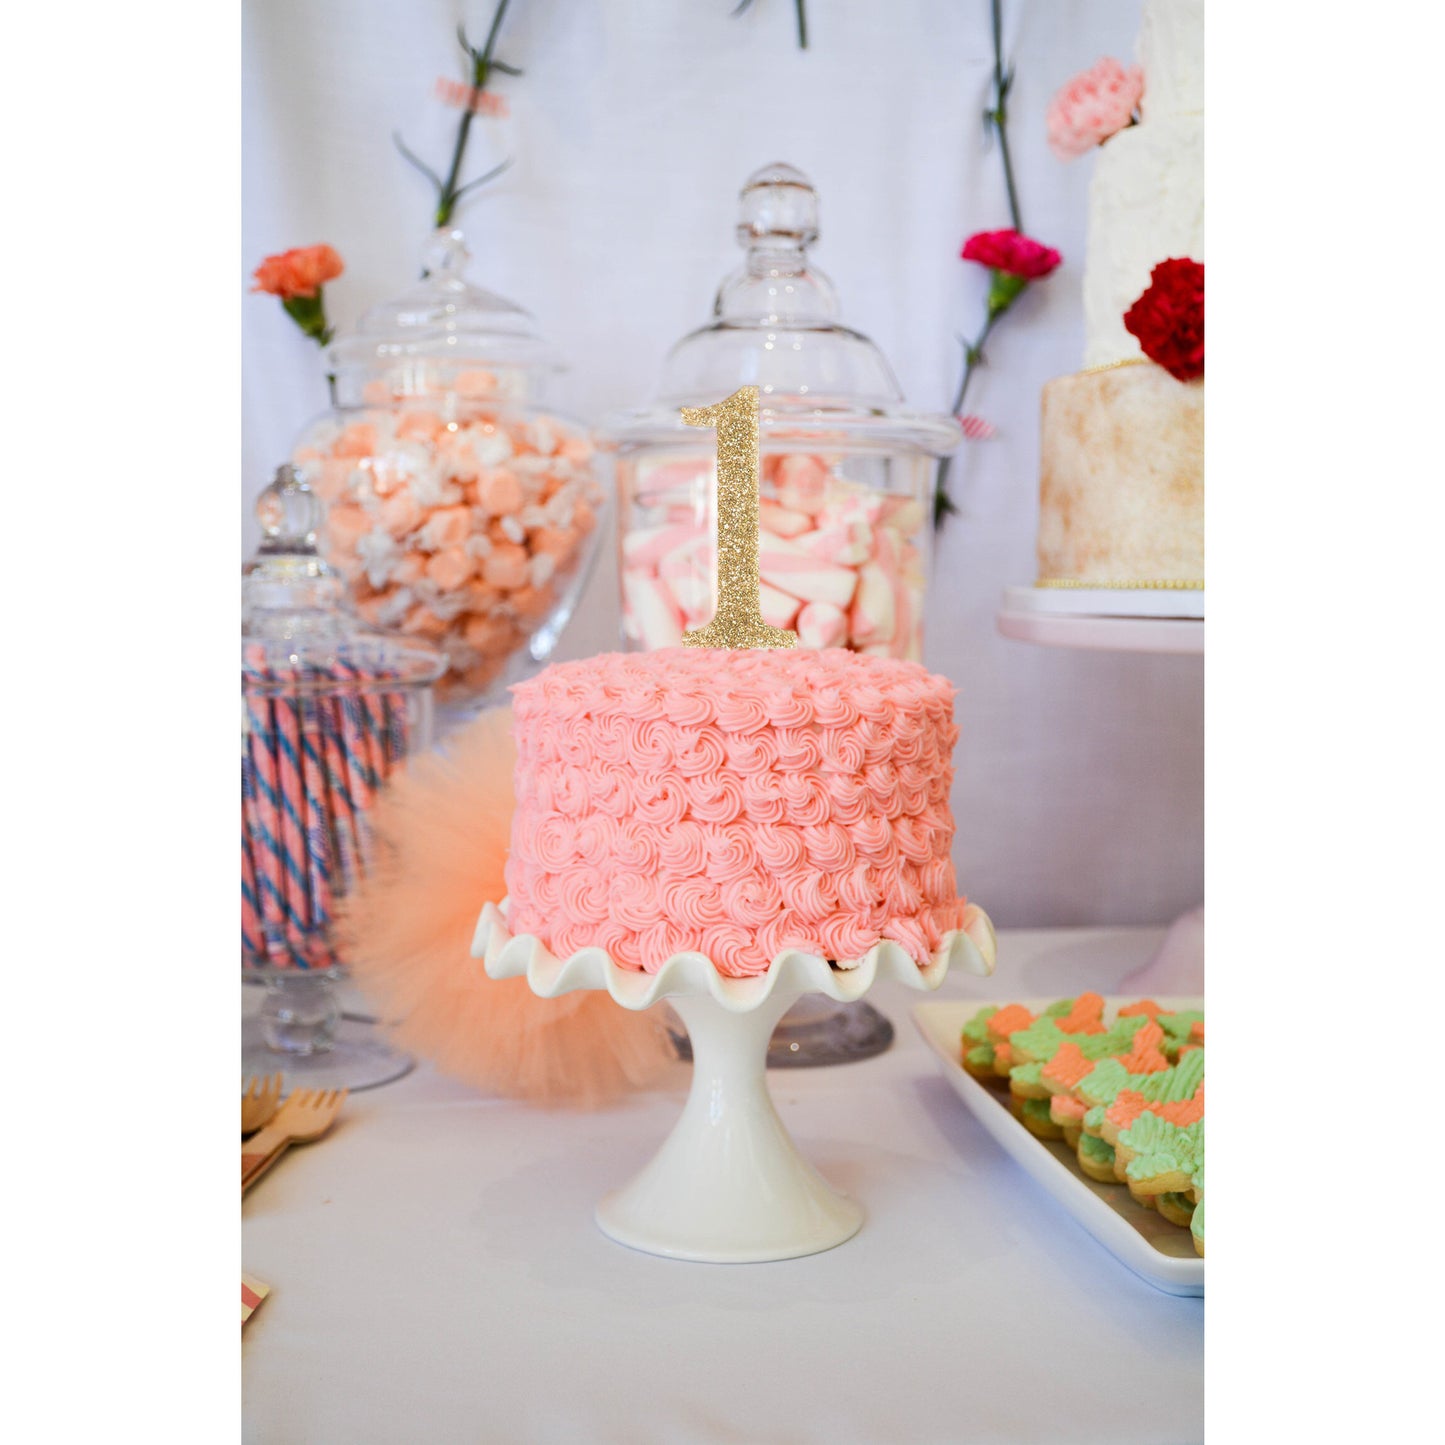 First Birthday "1" Glitter Cake Topper - Wedding Decor Gifts